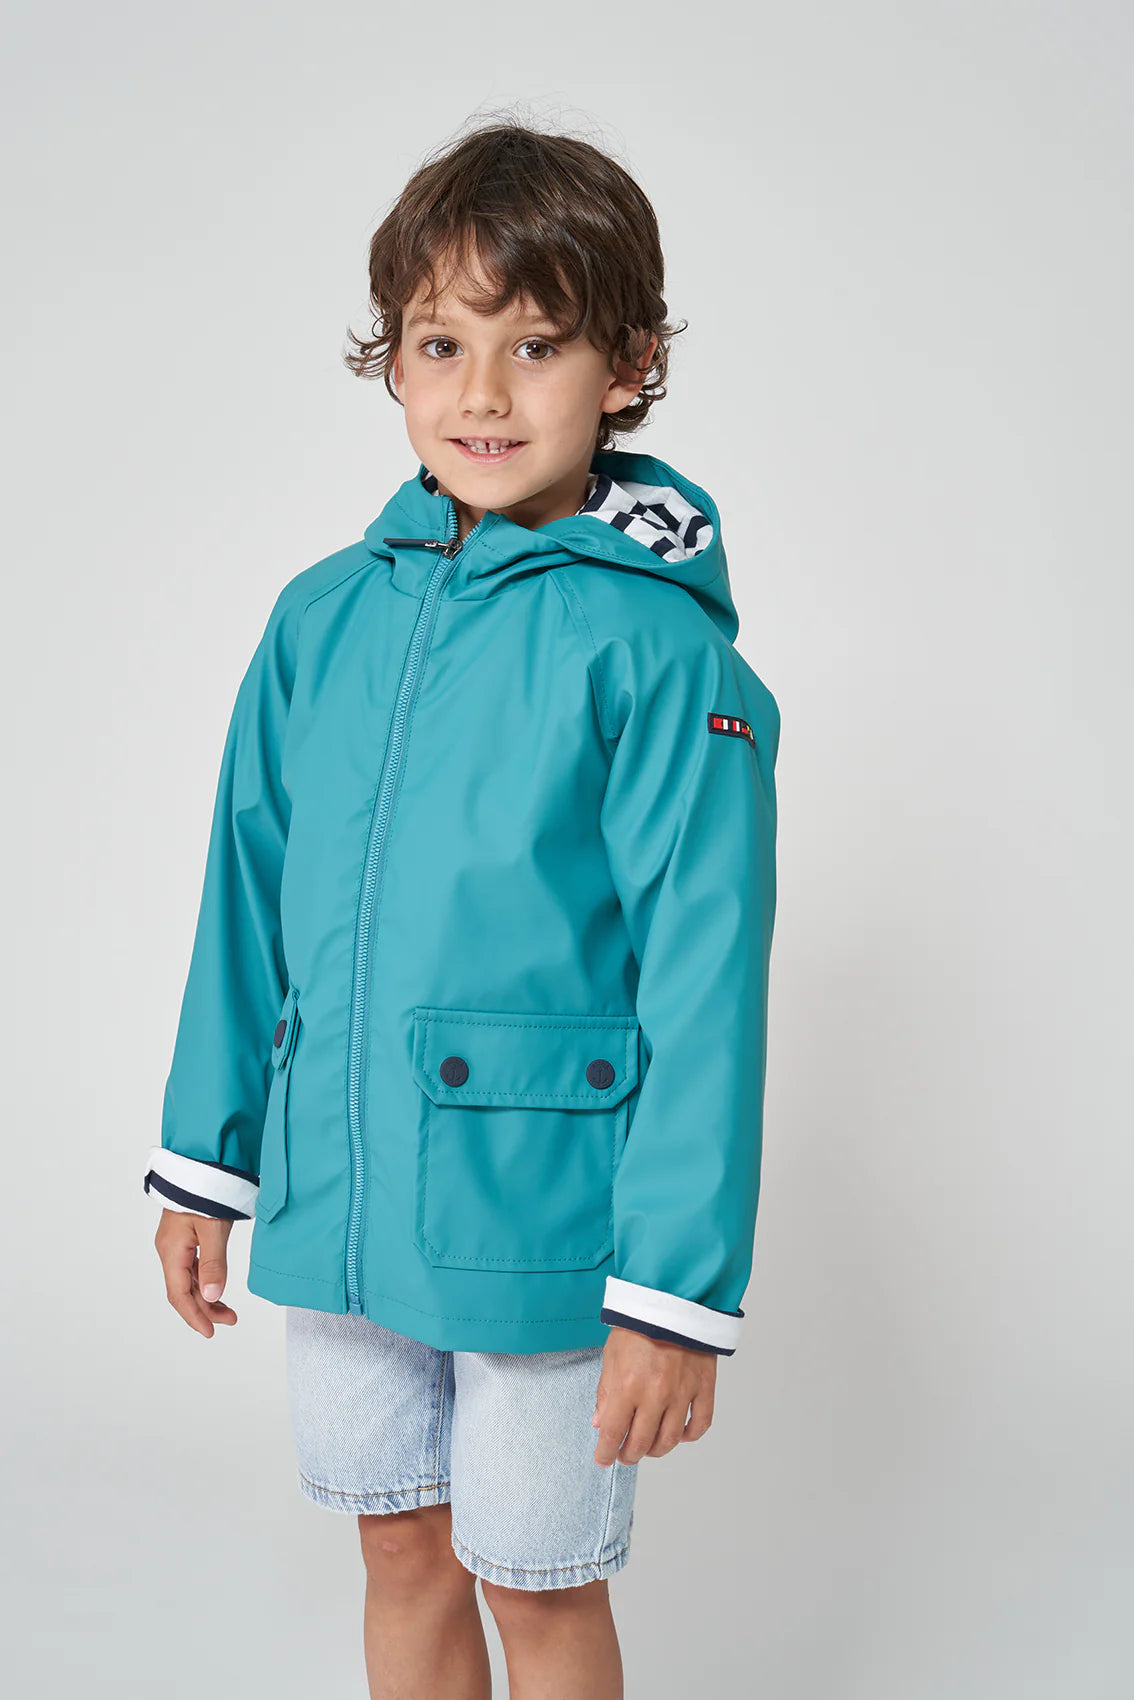 Batela Kids Nautical Rain Jacket with Stripe Cotton Lining Teal